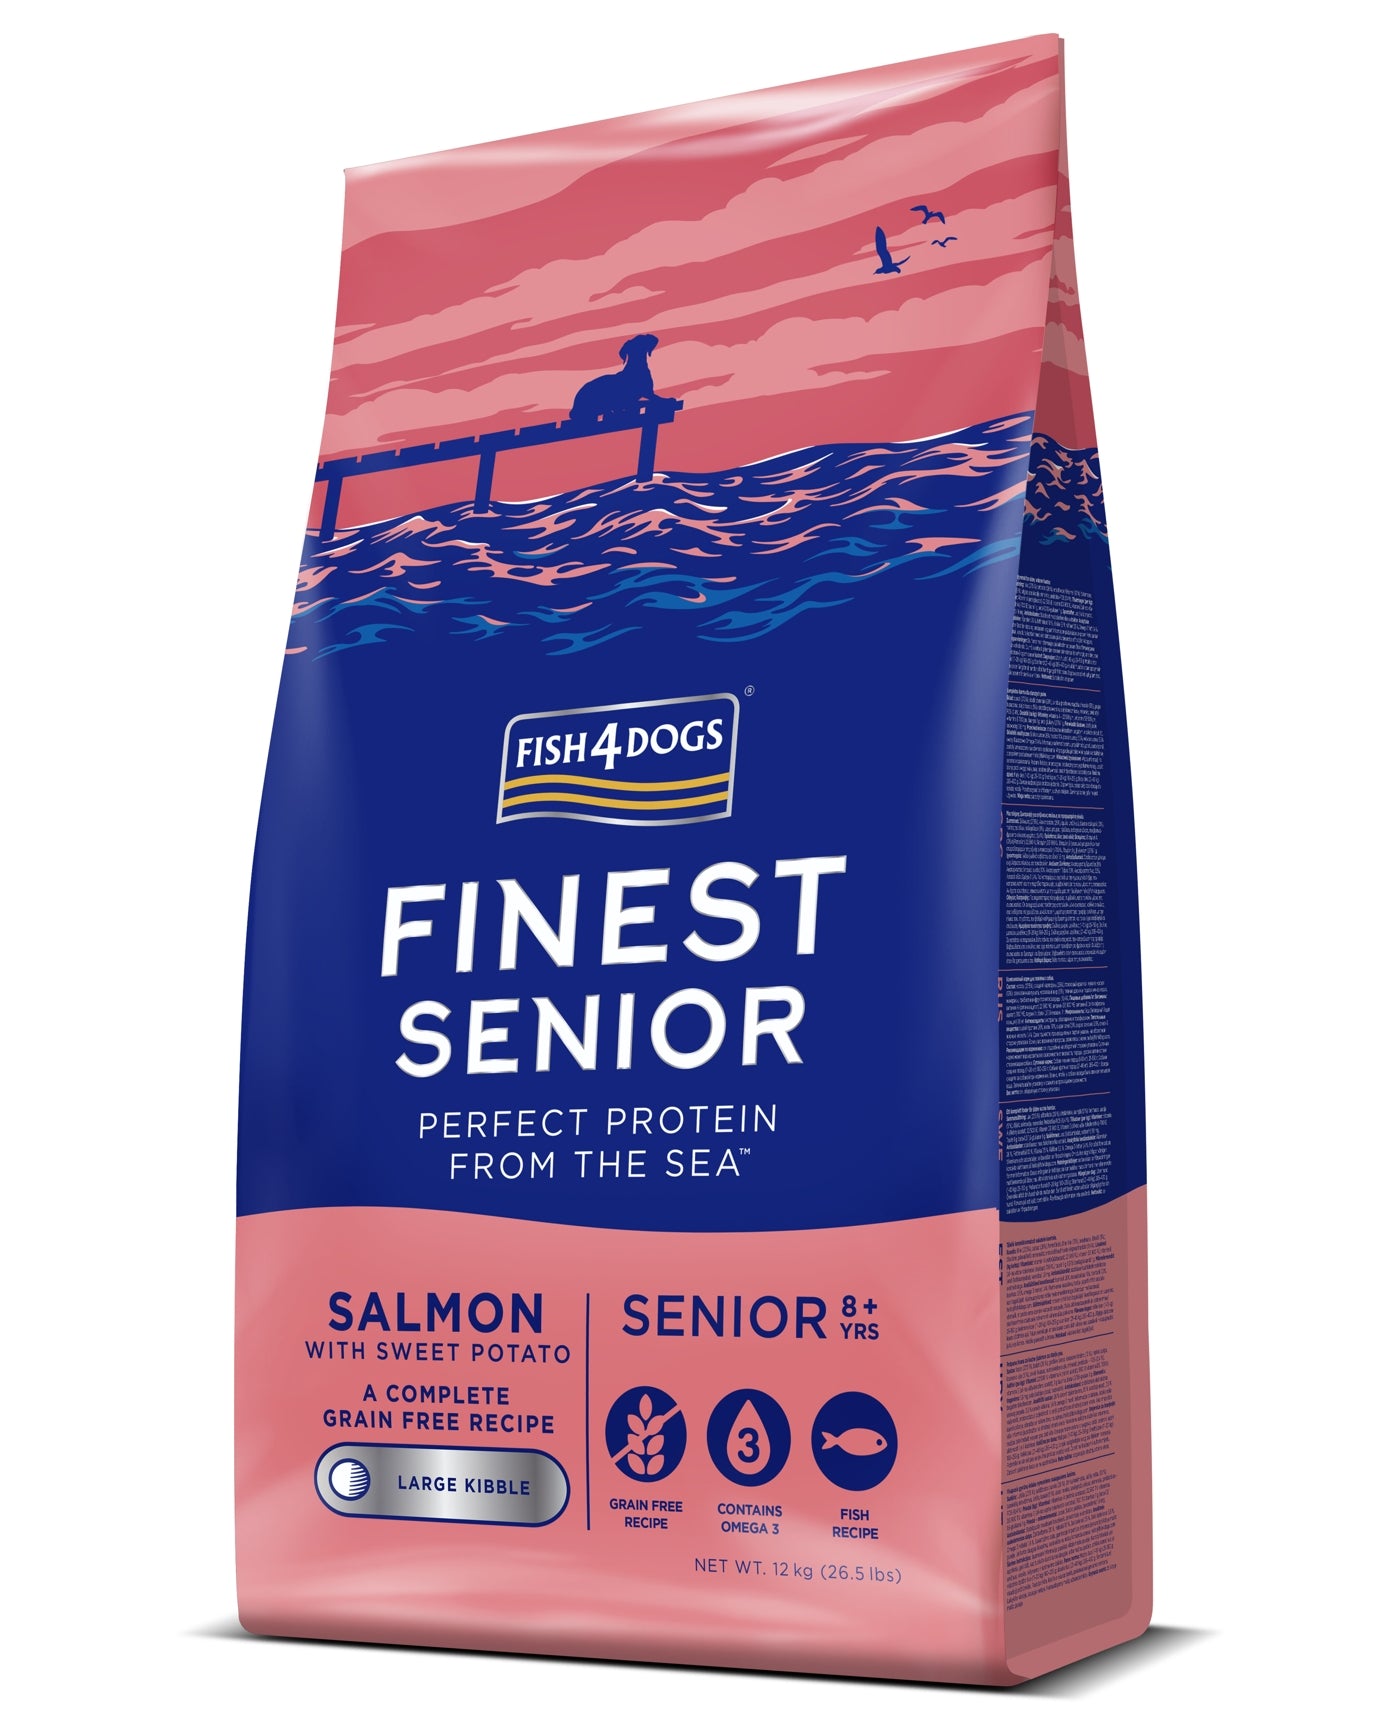 Fish4Dogs - Finest Senior Salmon and Sweet Potato (Large Kibble) - 1.5kg